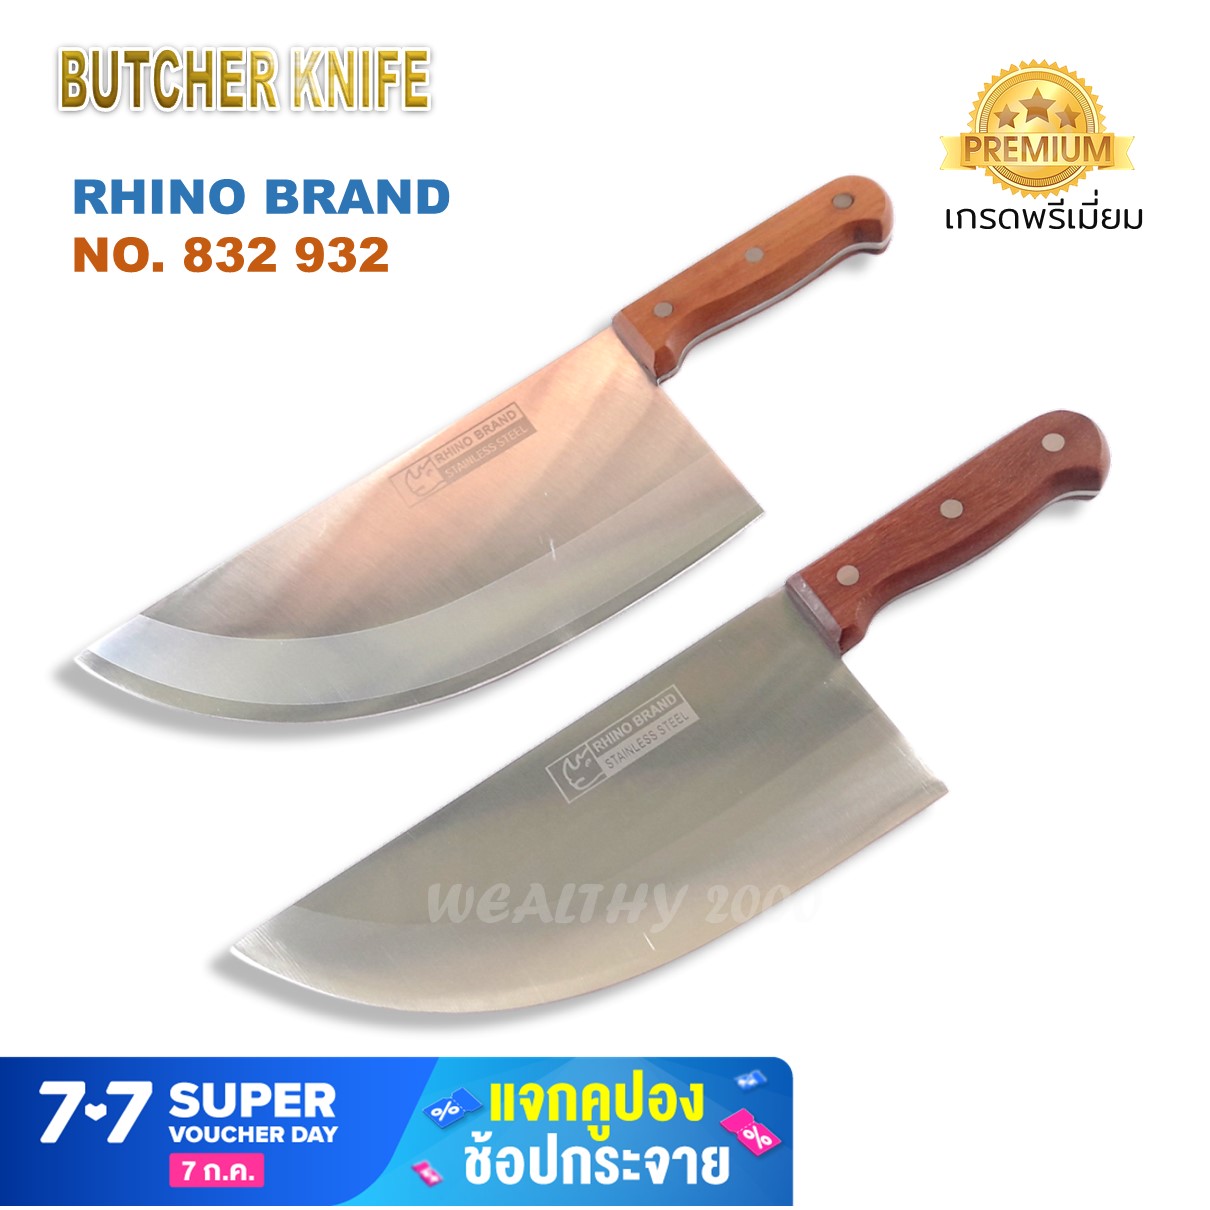 Rhino ฺButcher Knife No.832,932 มีดเขียงหมู มีดปังตอ มีดสับกระดูก มีดทำครัว ใบมีดทำจากเหล็กสแตนเลส ด้ามไม้แท้  มี 2 ขนาด